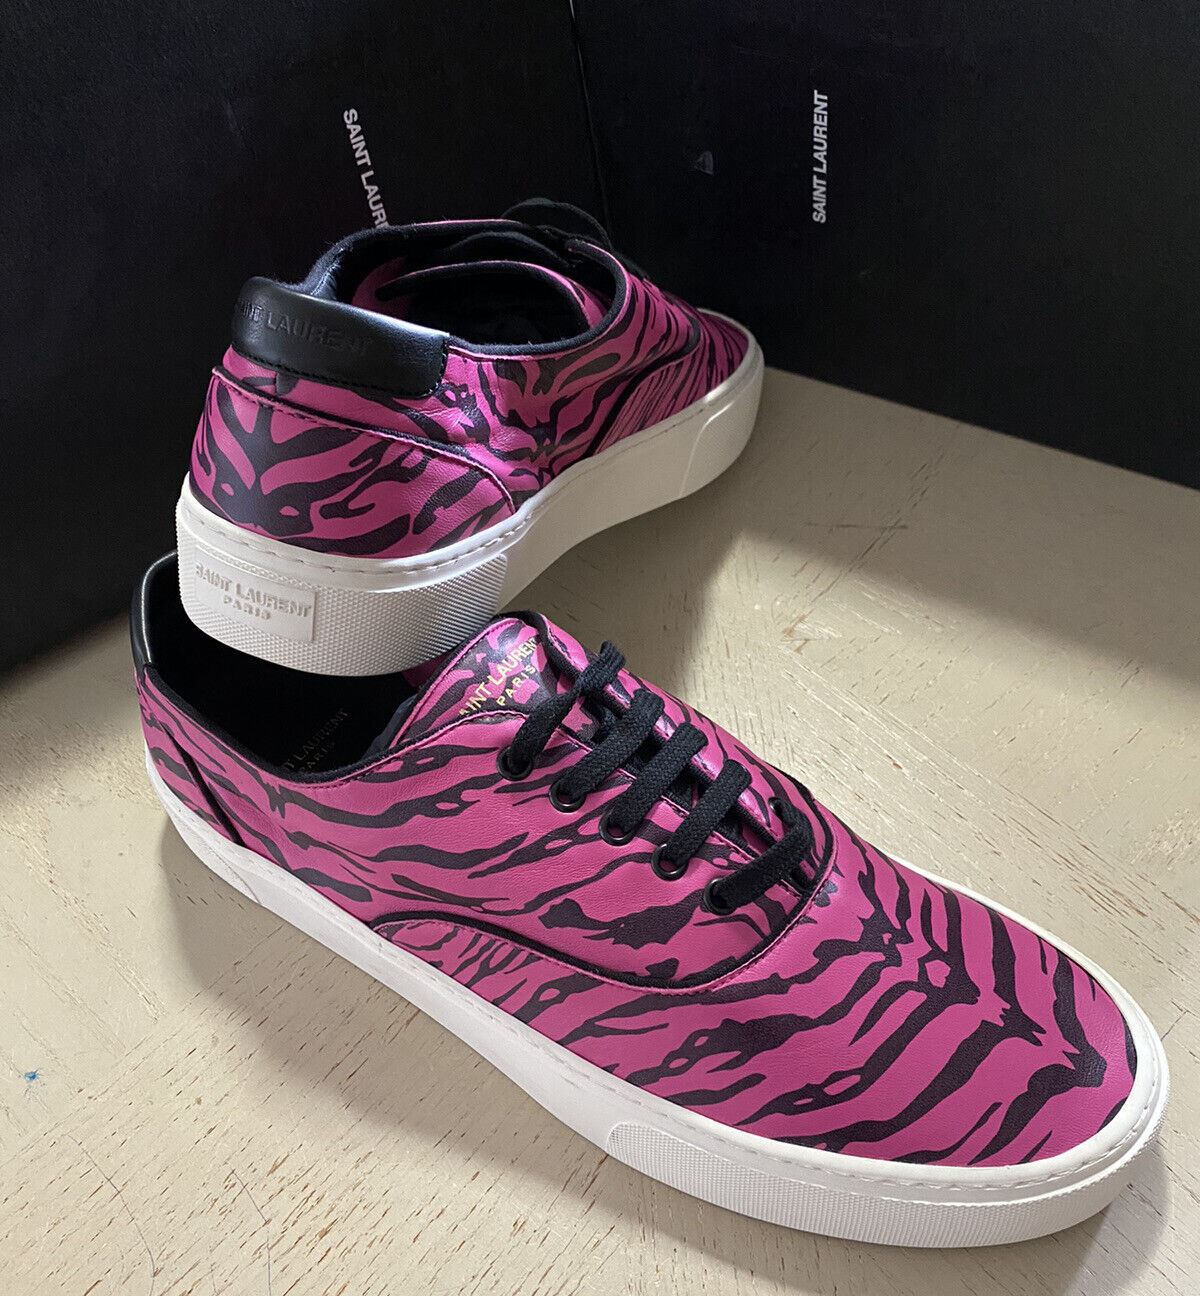 NIB Saint Laurent Men’s Leather Sneakers Shoes Black/Pink 10 US/43 Eu Italy